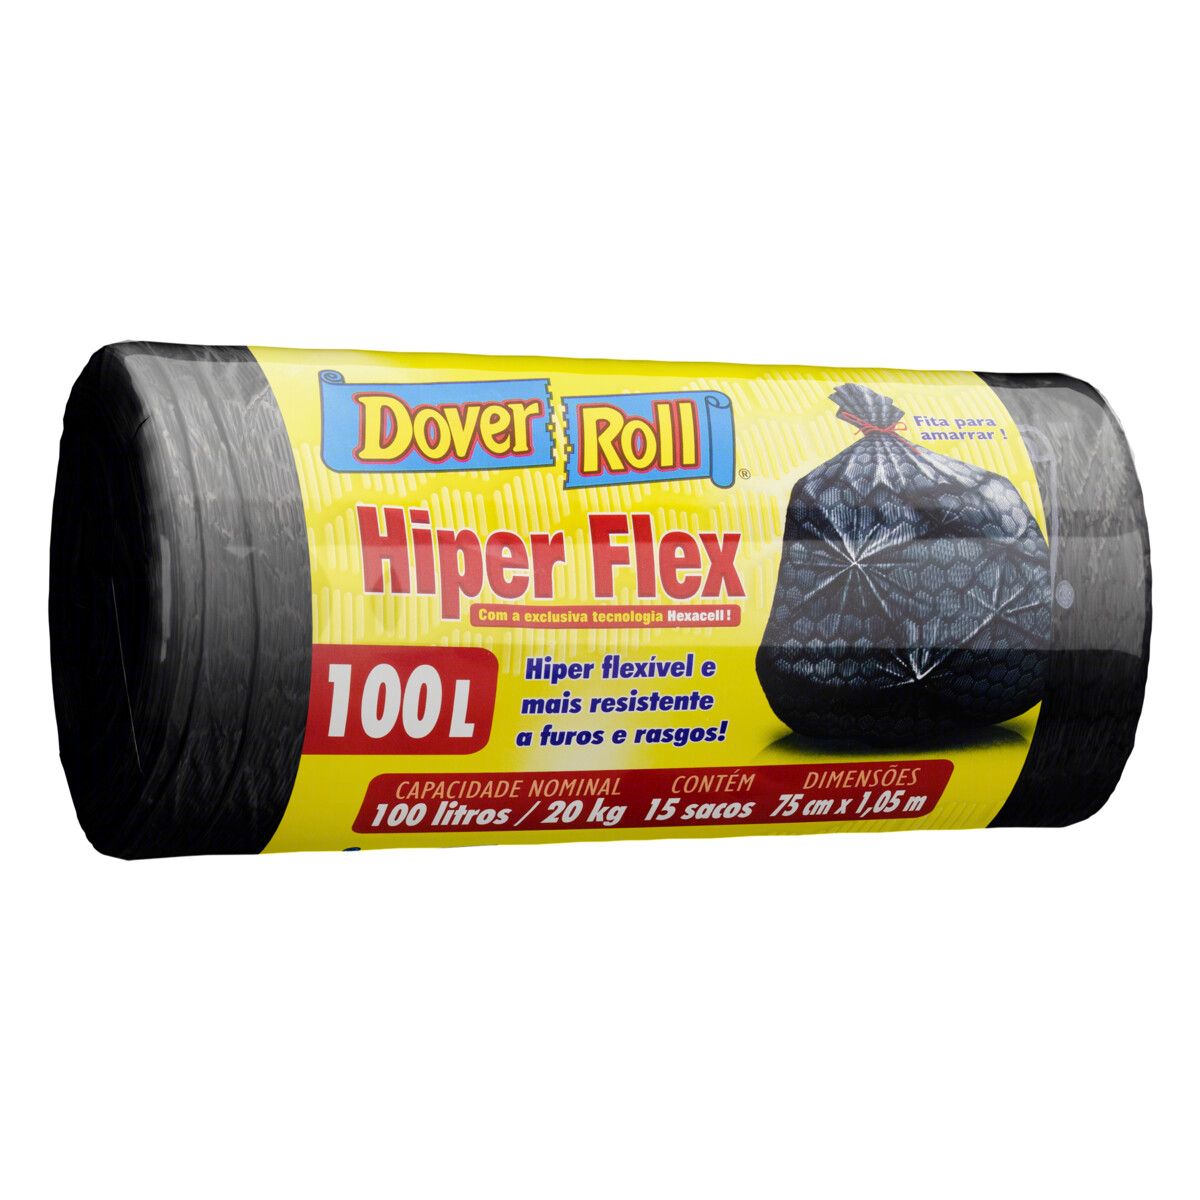 Saco para Lixo Dover Roll 100L Hiper Flex 15 Unidades image number 3